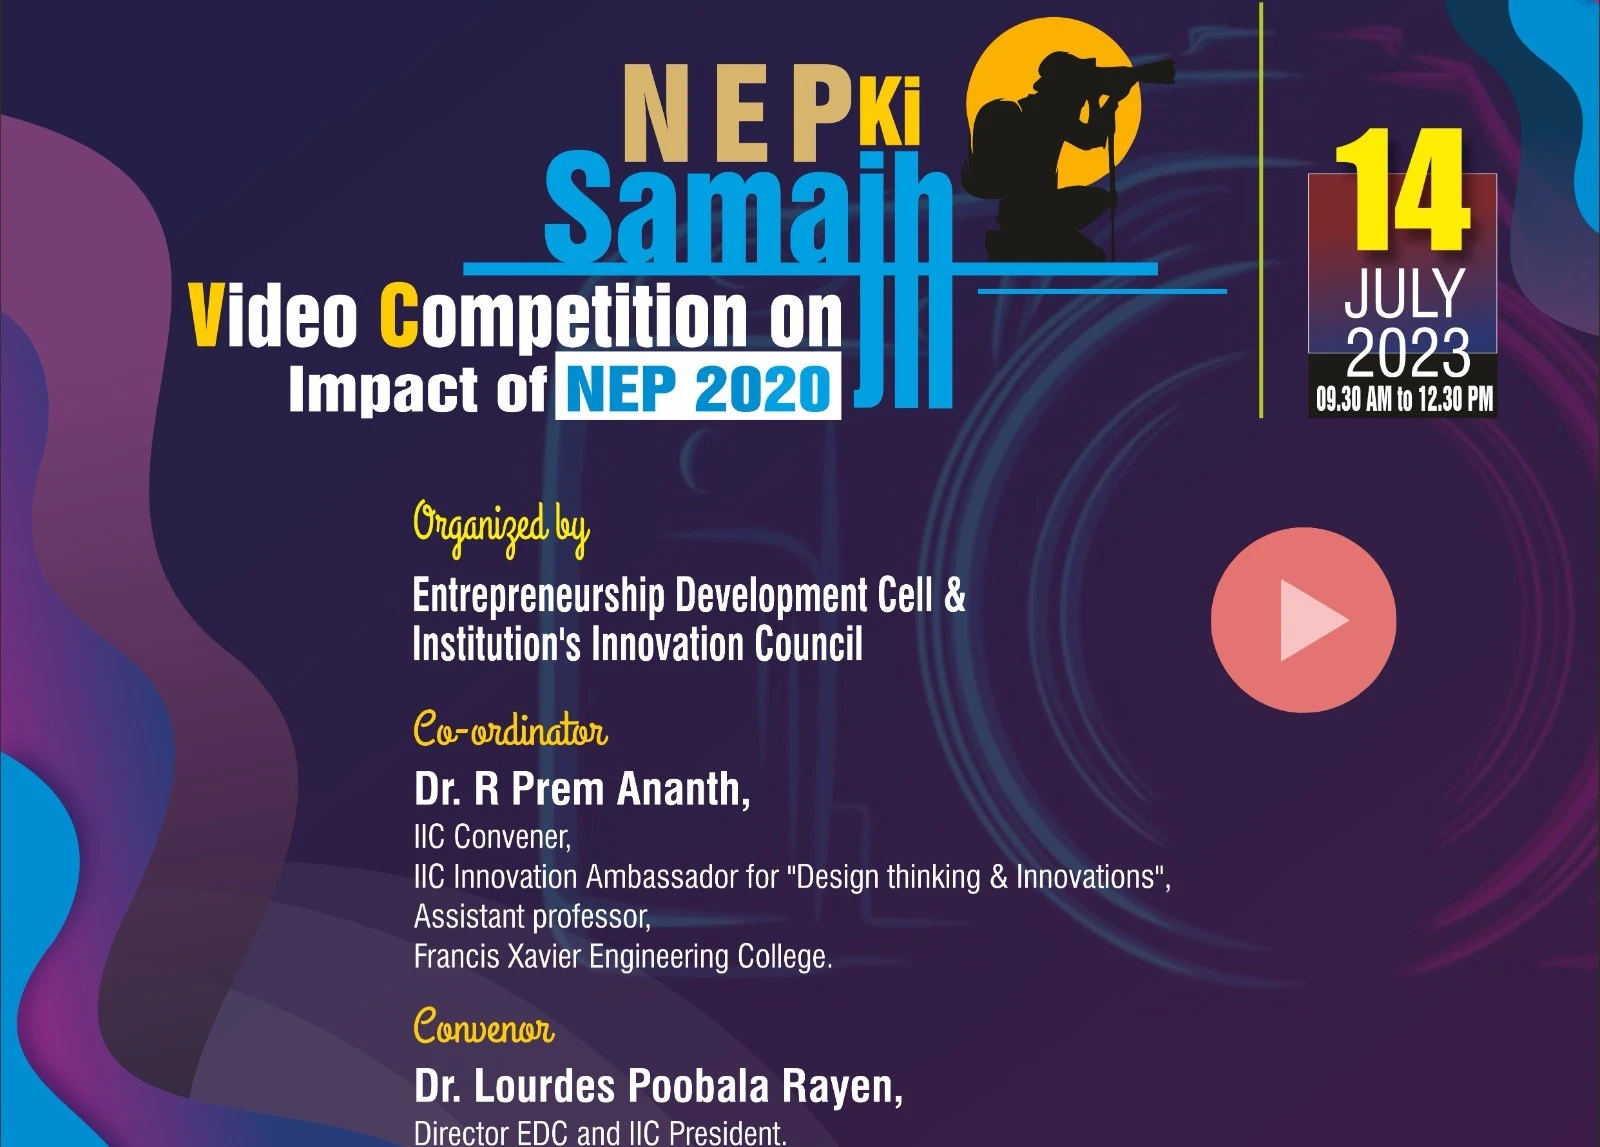 NEP Ki Samajh Video Competition on Impact of NEP 2020